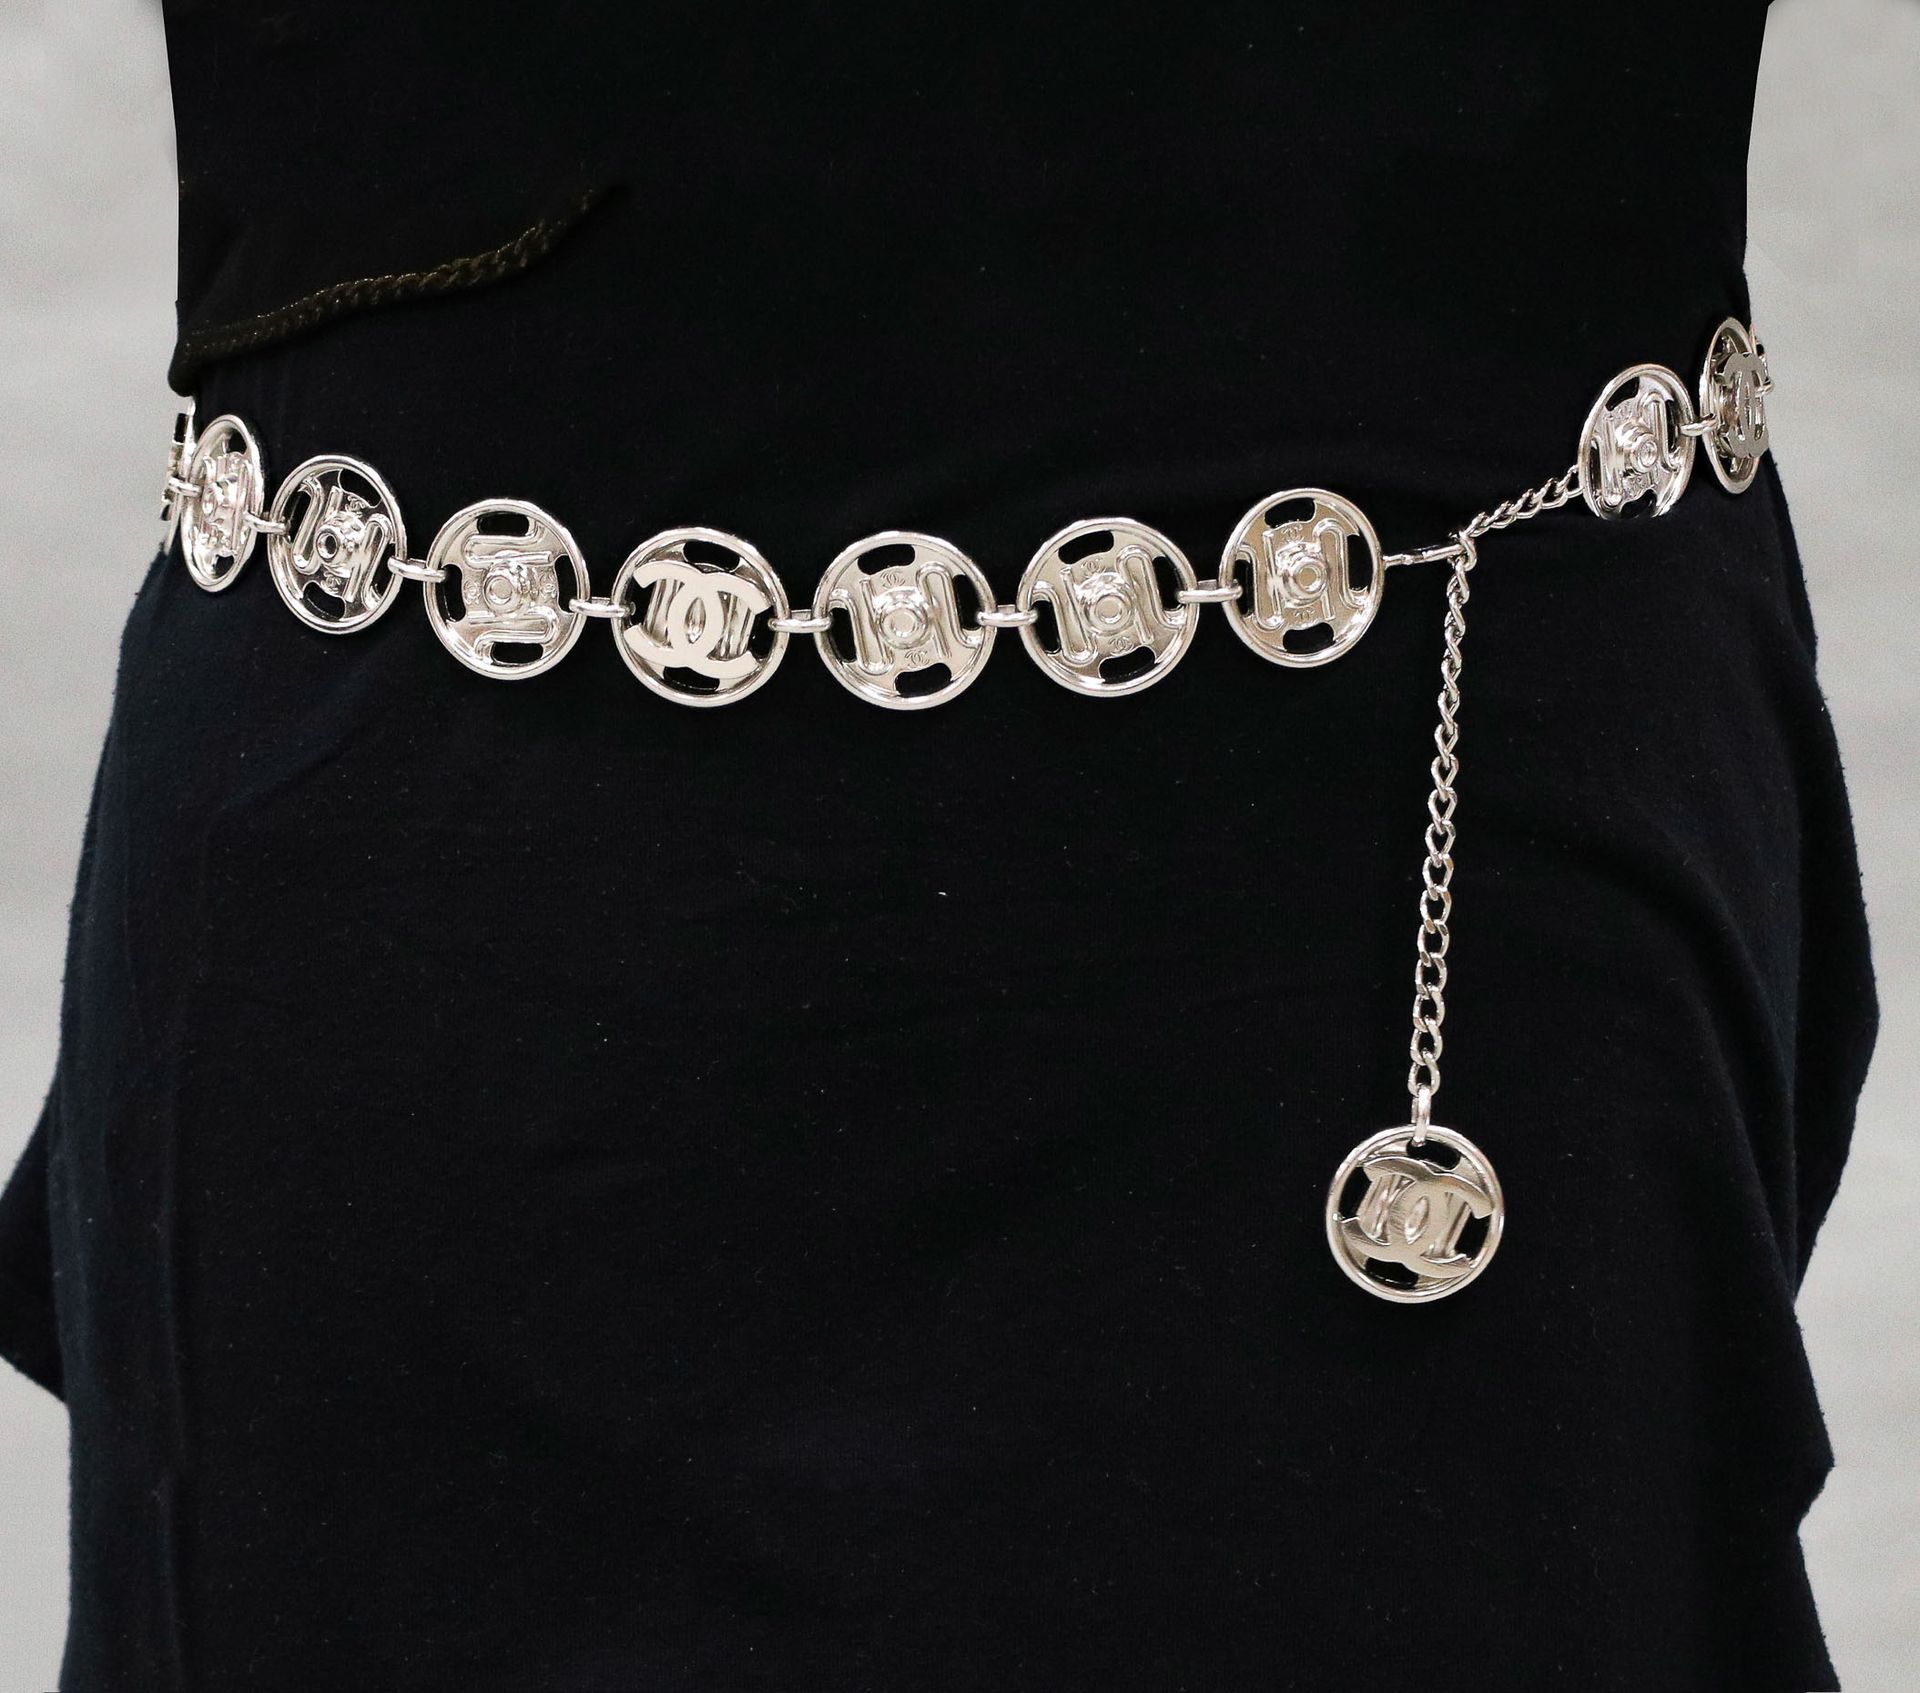 Null 香奈儿 - 约2003年 - 镀银金属腰带或项链，由圆形奖章组成，上面有签名的压钉 - 长：91.5厘米